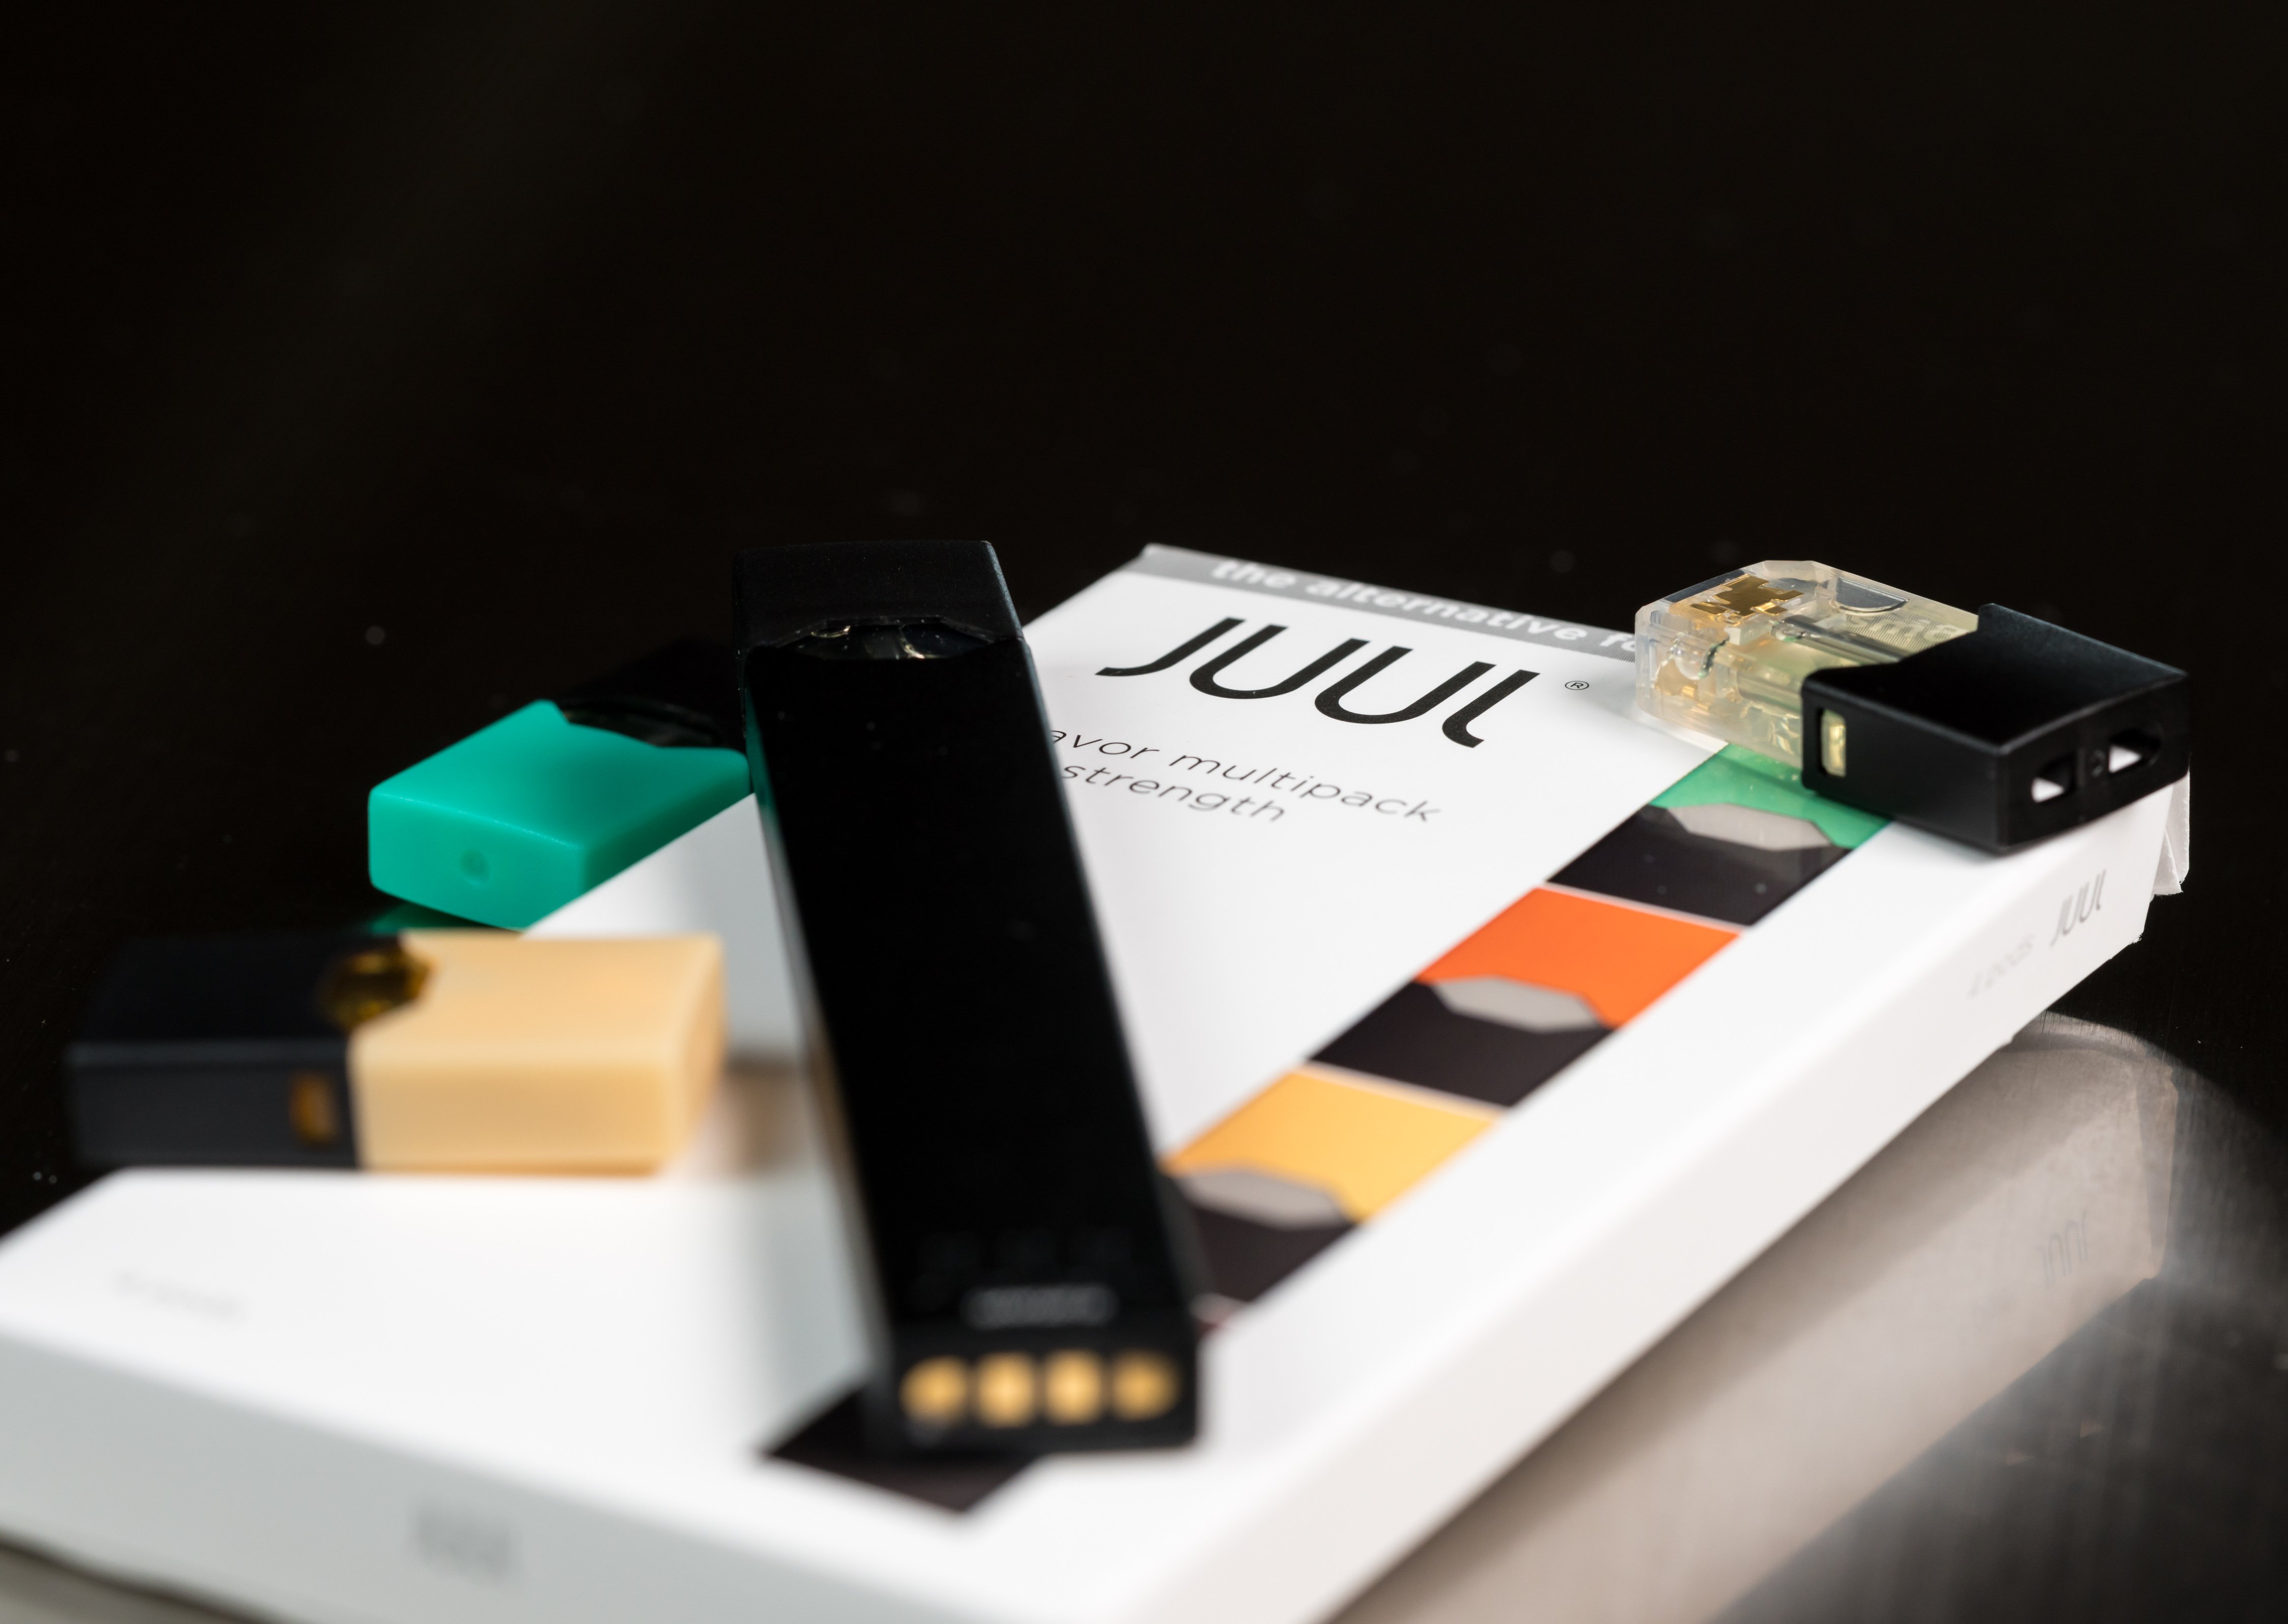 A Juul e-cigarette or nicotine vapor dispenser box and JUULpod rest against a dark background. Shutterstock image via Steve Heap